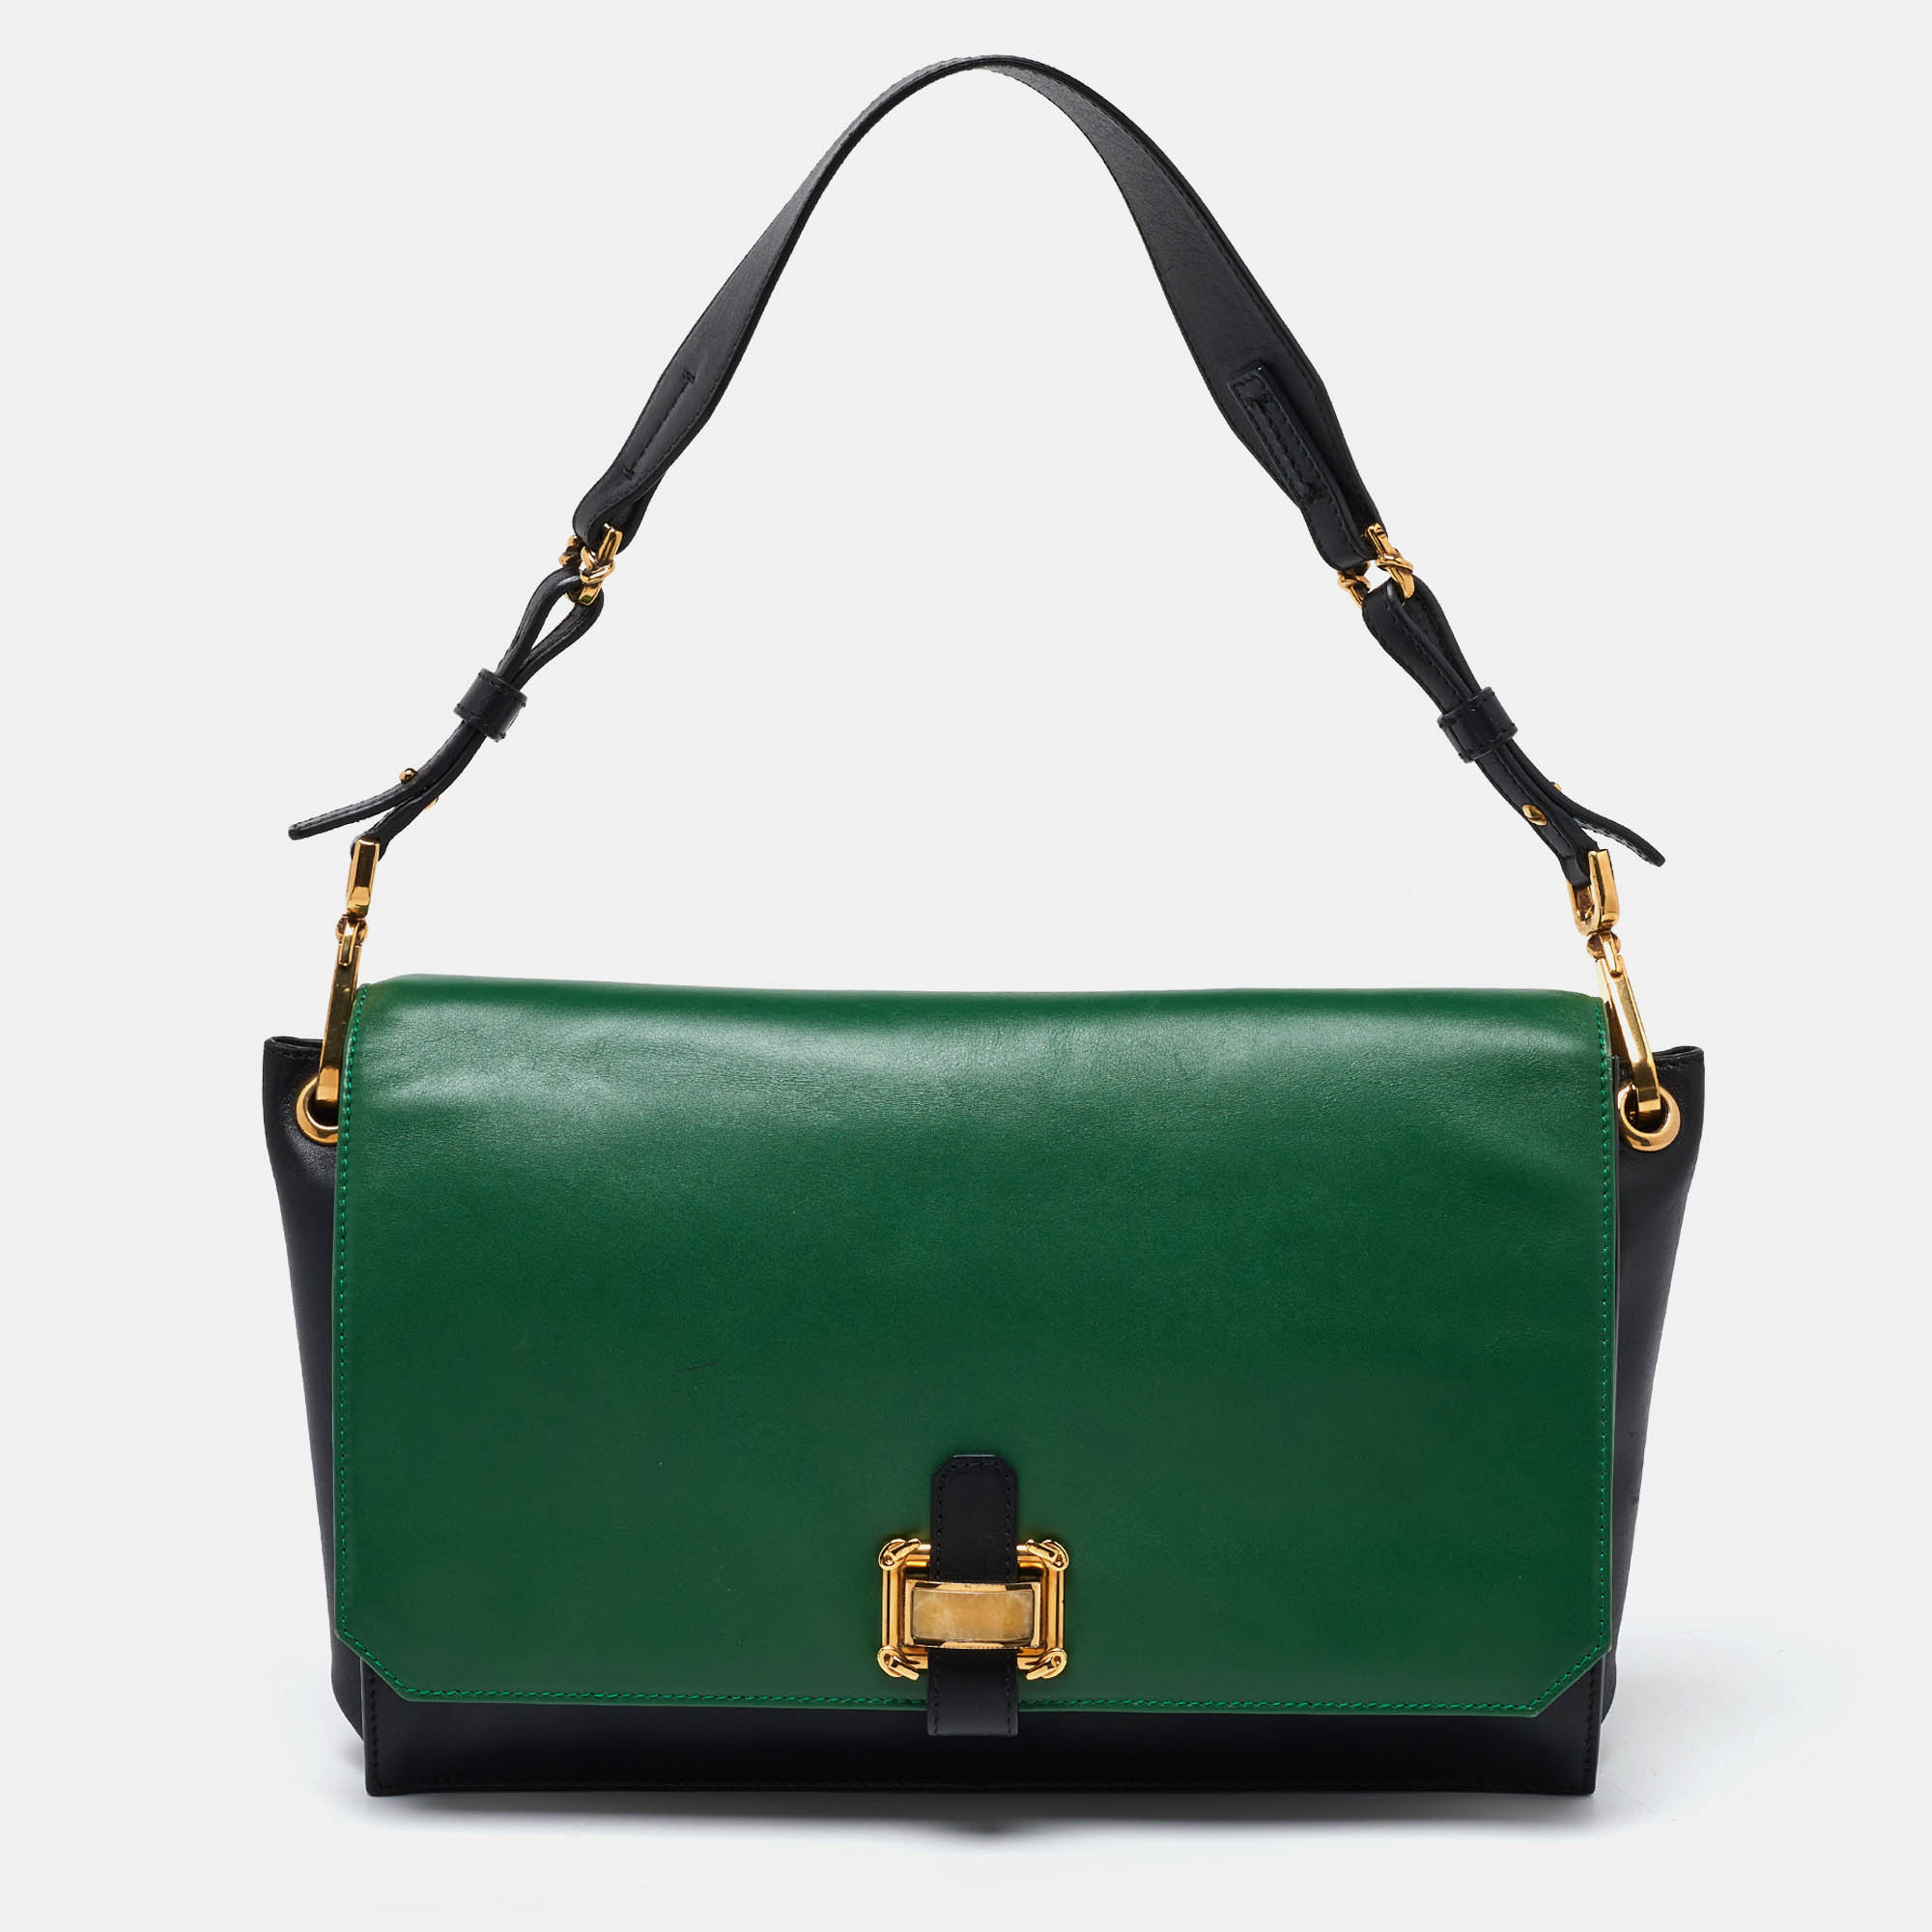 Oscar de la renta green/black leather flap shoulder bag